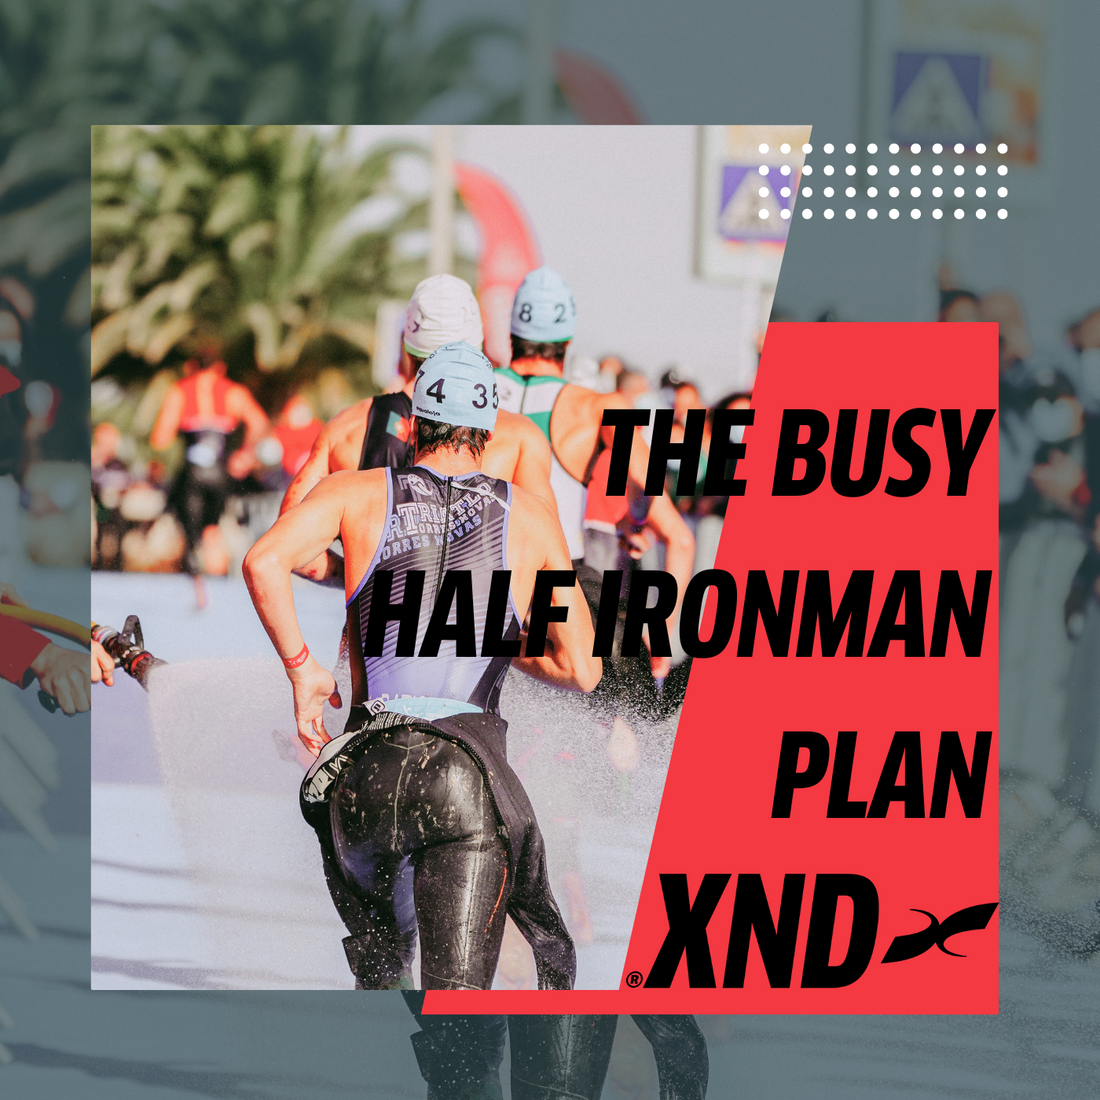 The busy Half Ironman plan